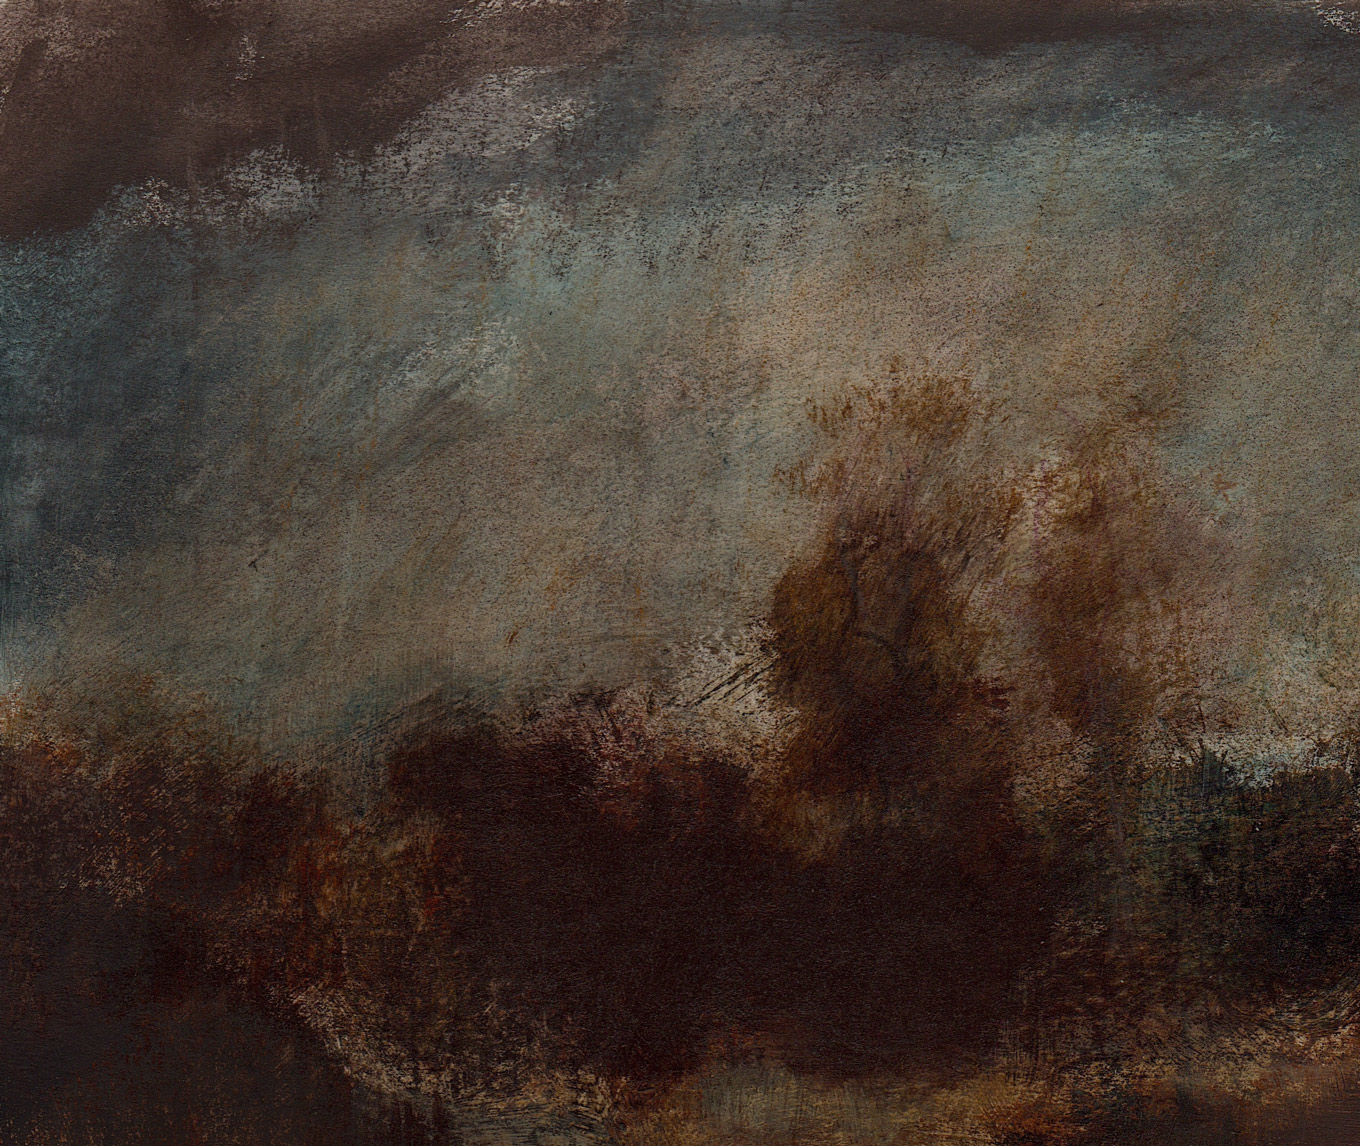 L1210 - Nicholas Herbert, British Artist, mixed media landscape painting of Chobham Common, mixed media on paper,2020